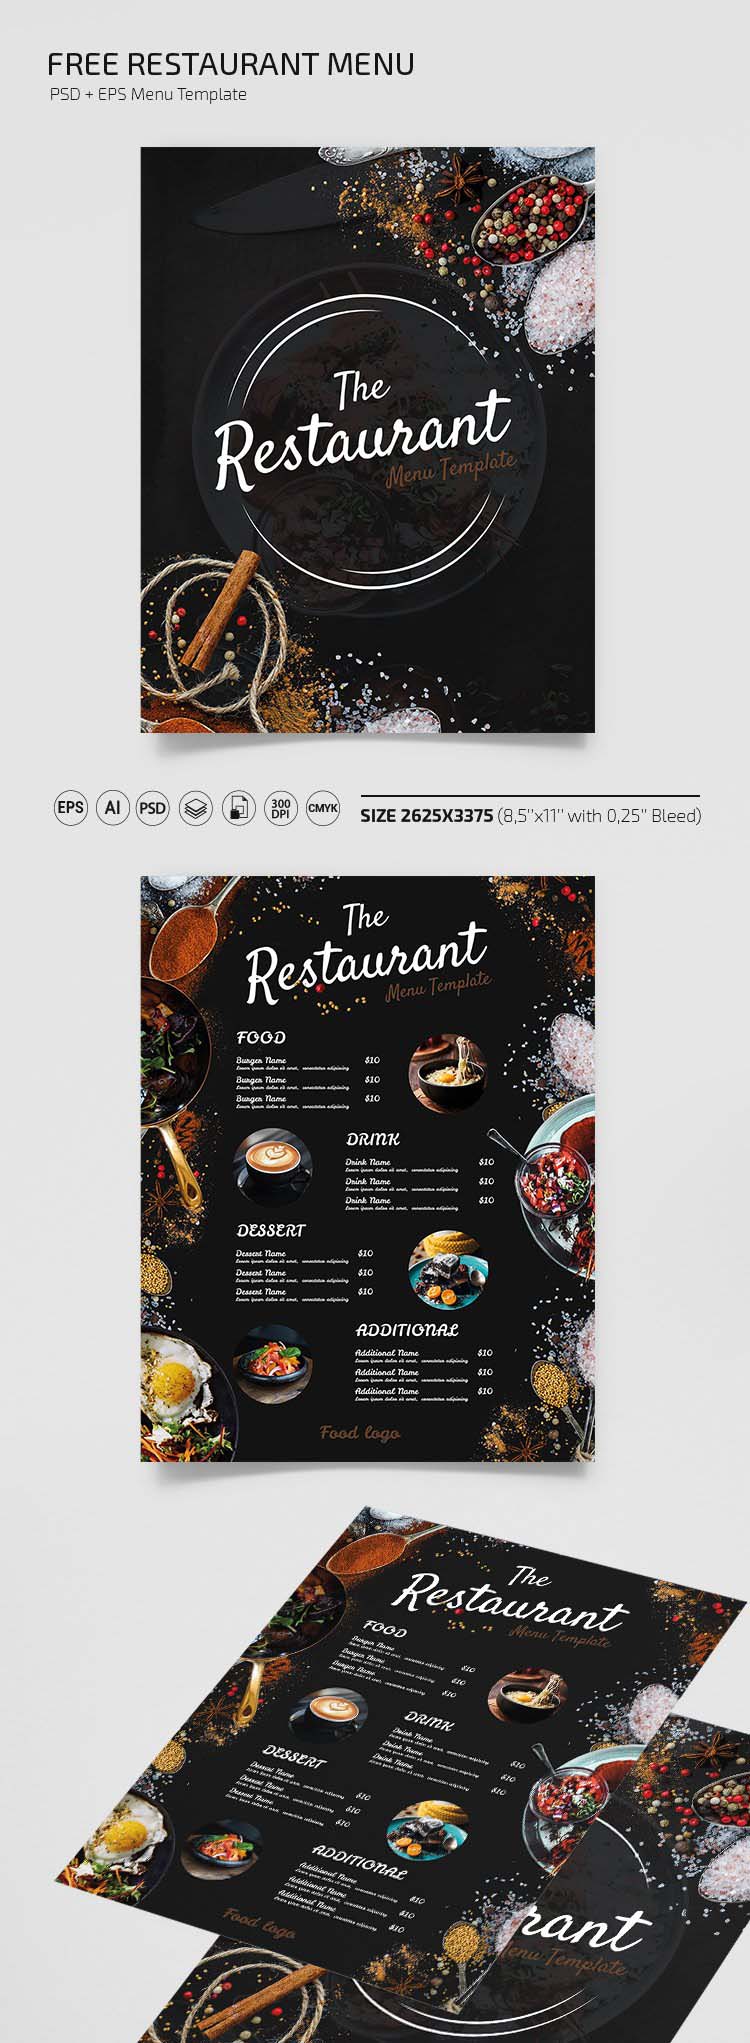 Free Restaurant Menu Design PSD Free Download